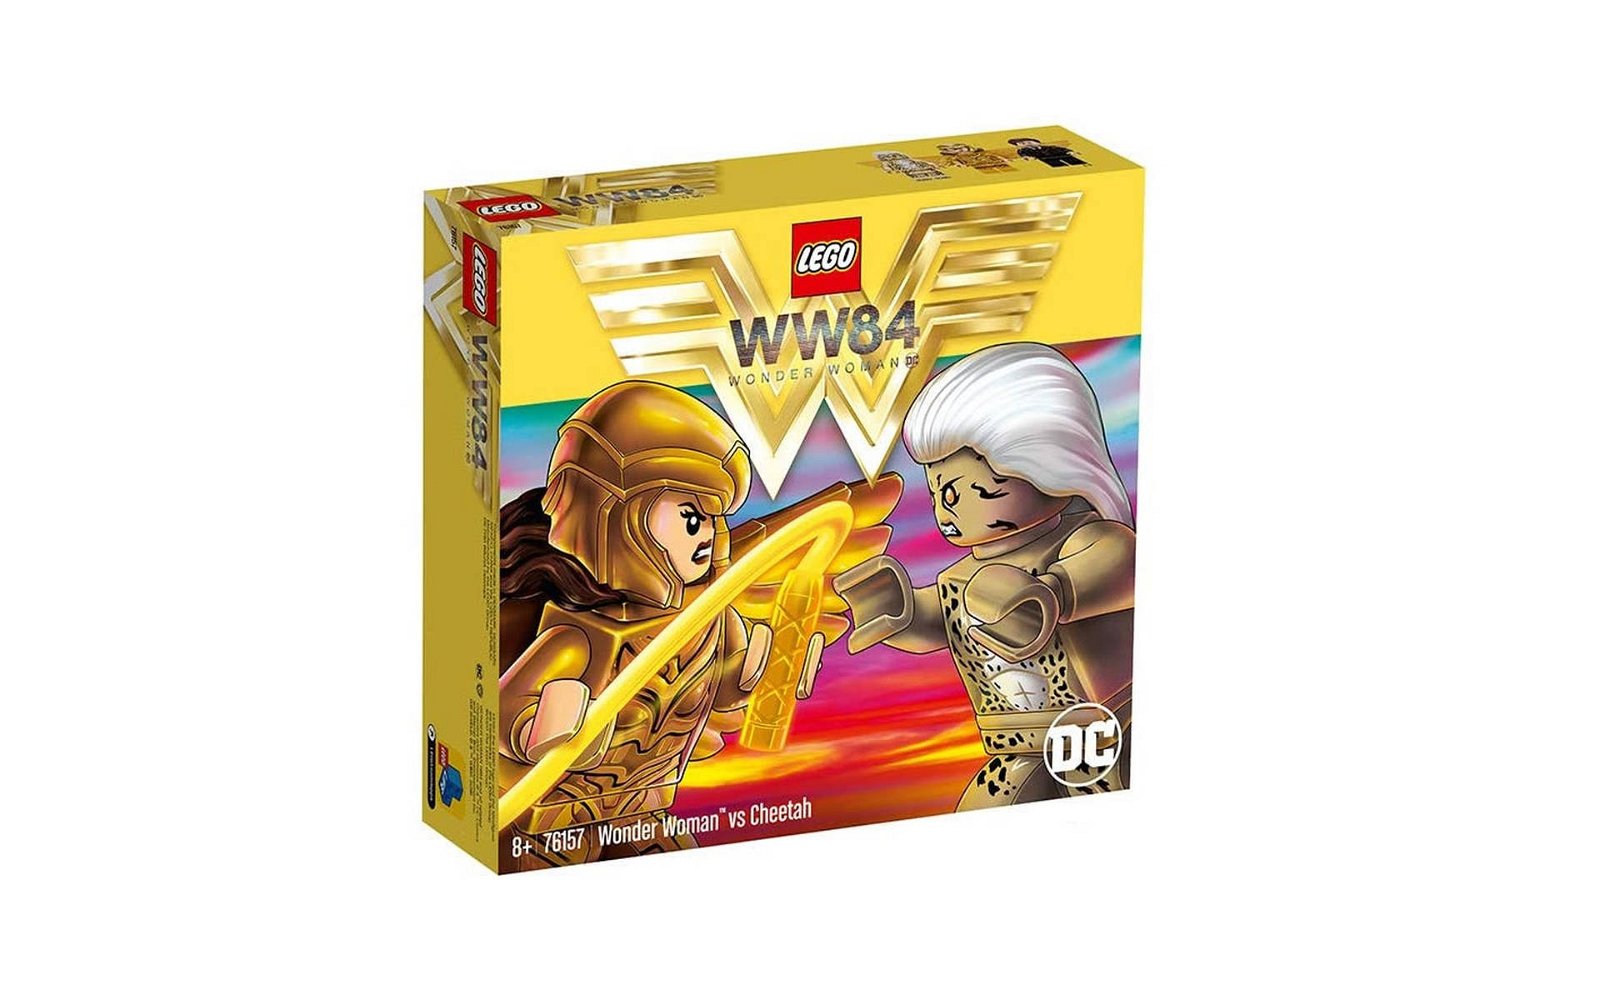 Immagine di LEGO set # 76157 Wonder Woman vs Cheetah in vendita!